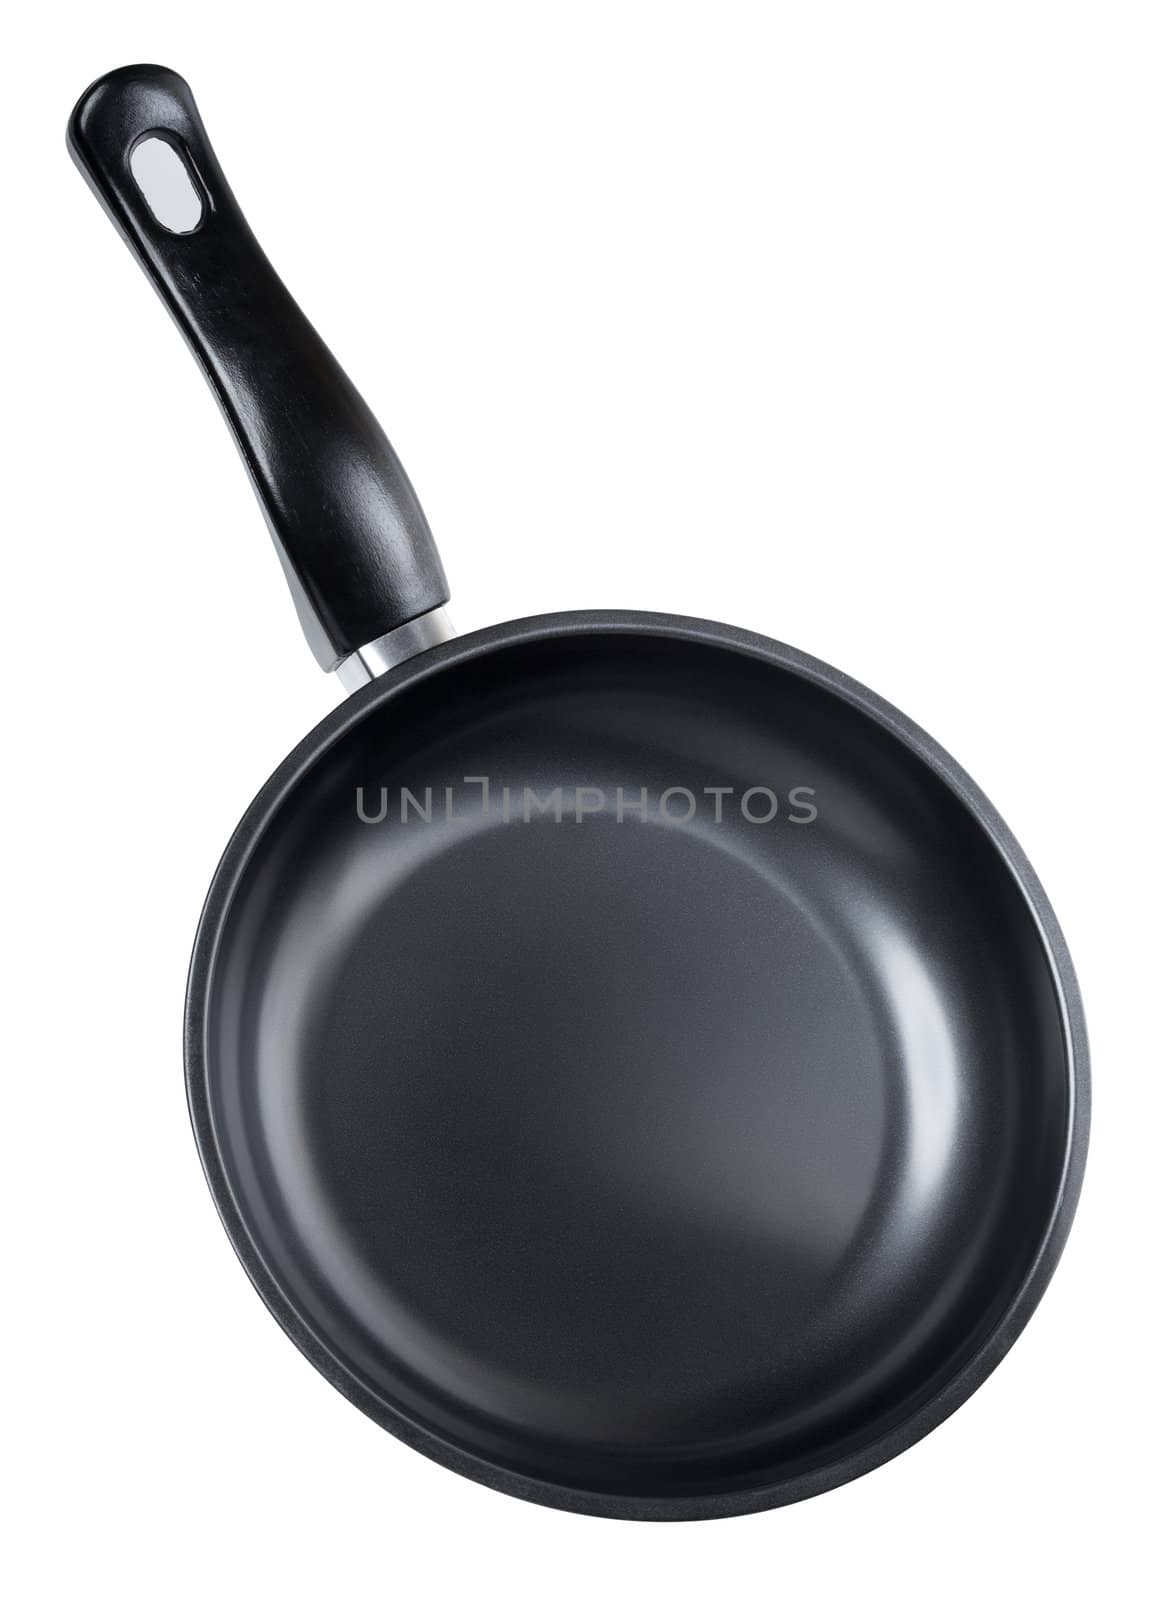 Frying Pan by petr_malyshev